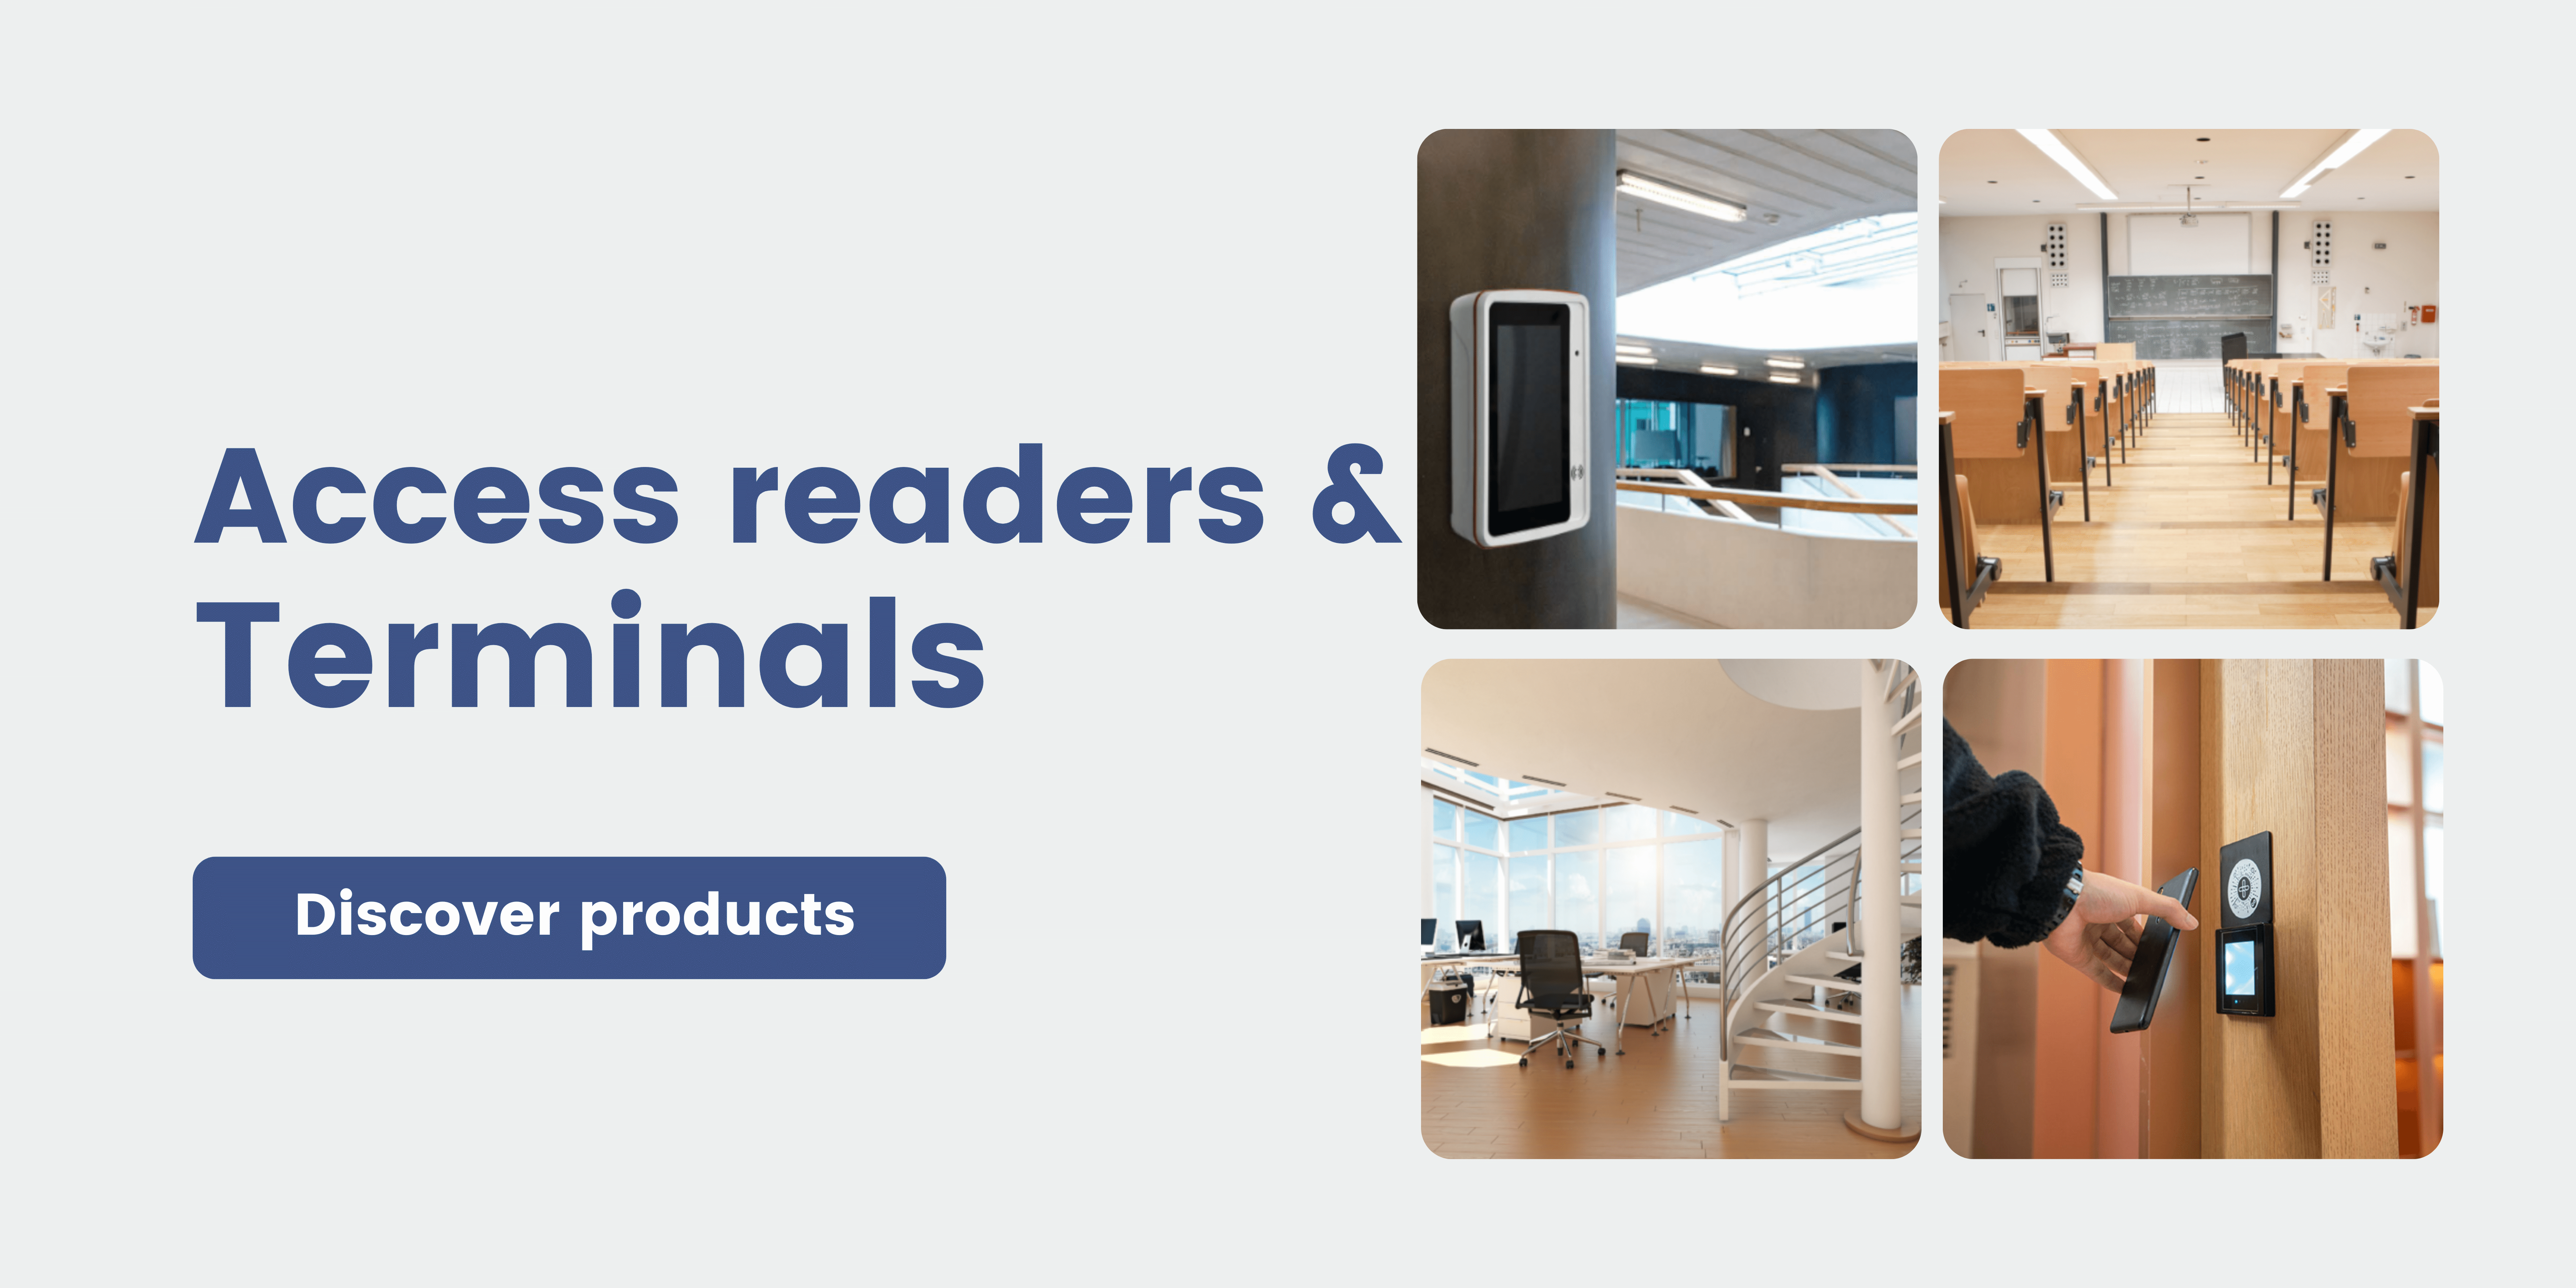 Access readers & Terminals